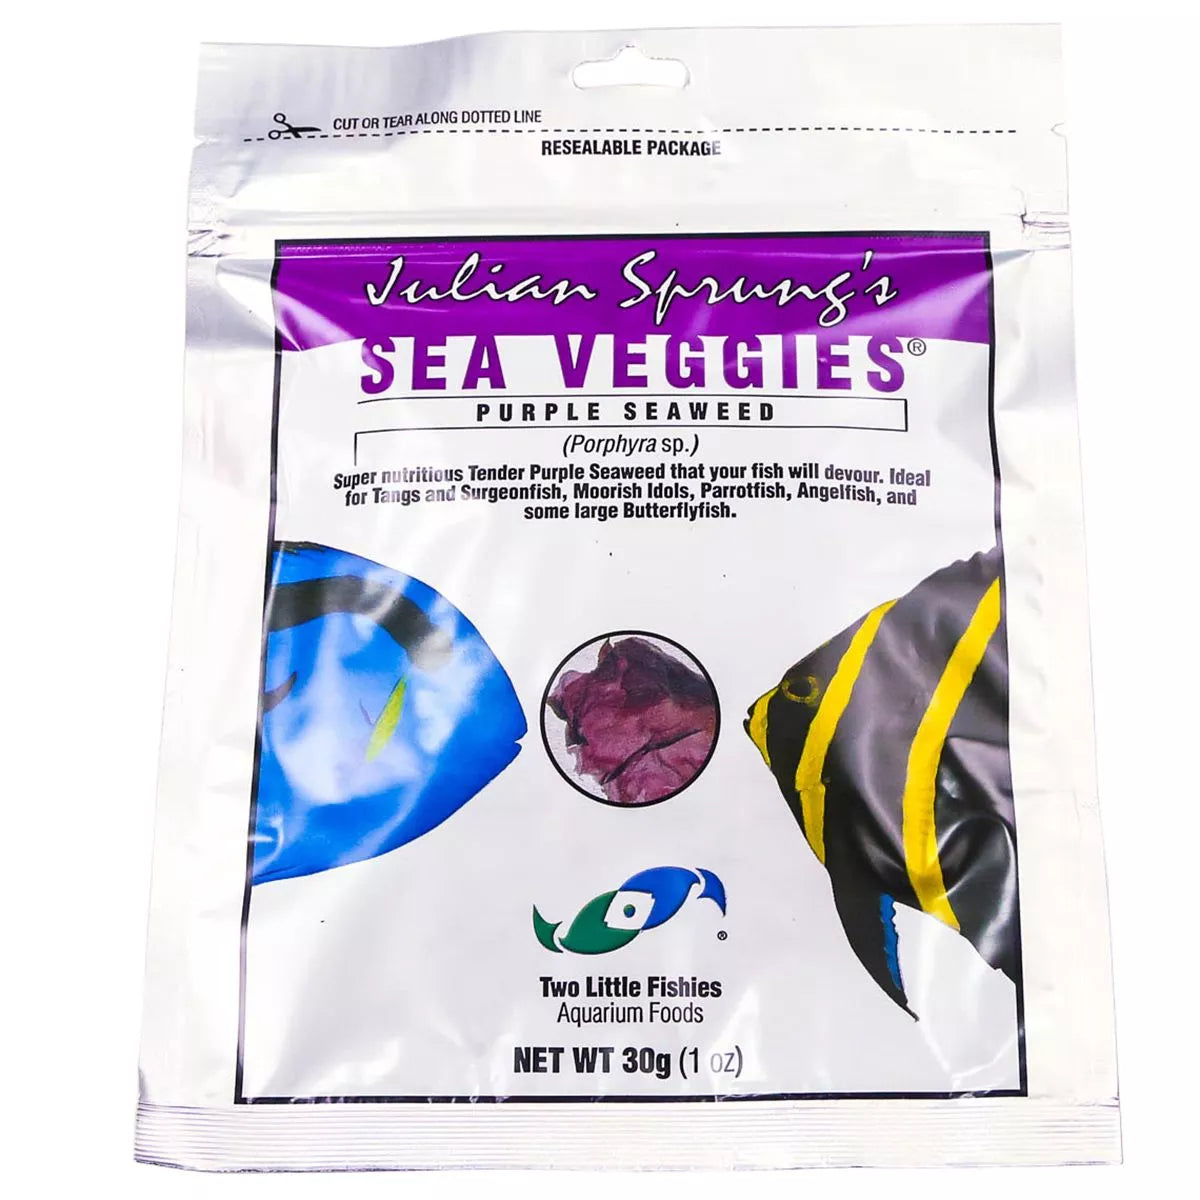 Julian Sprung’s Sea Veggies - Two Little Fishies